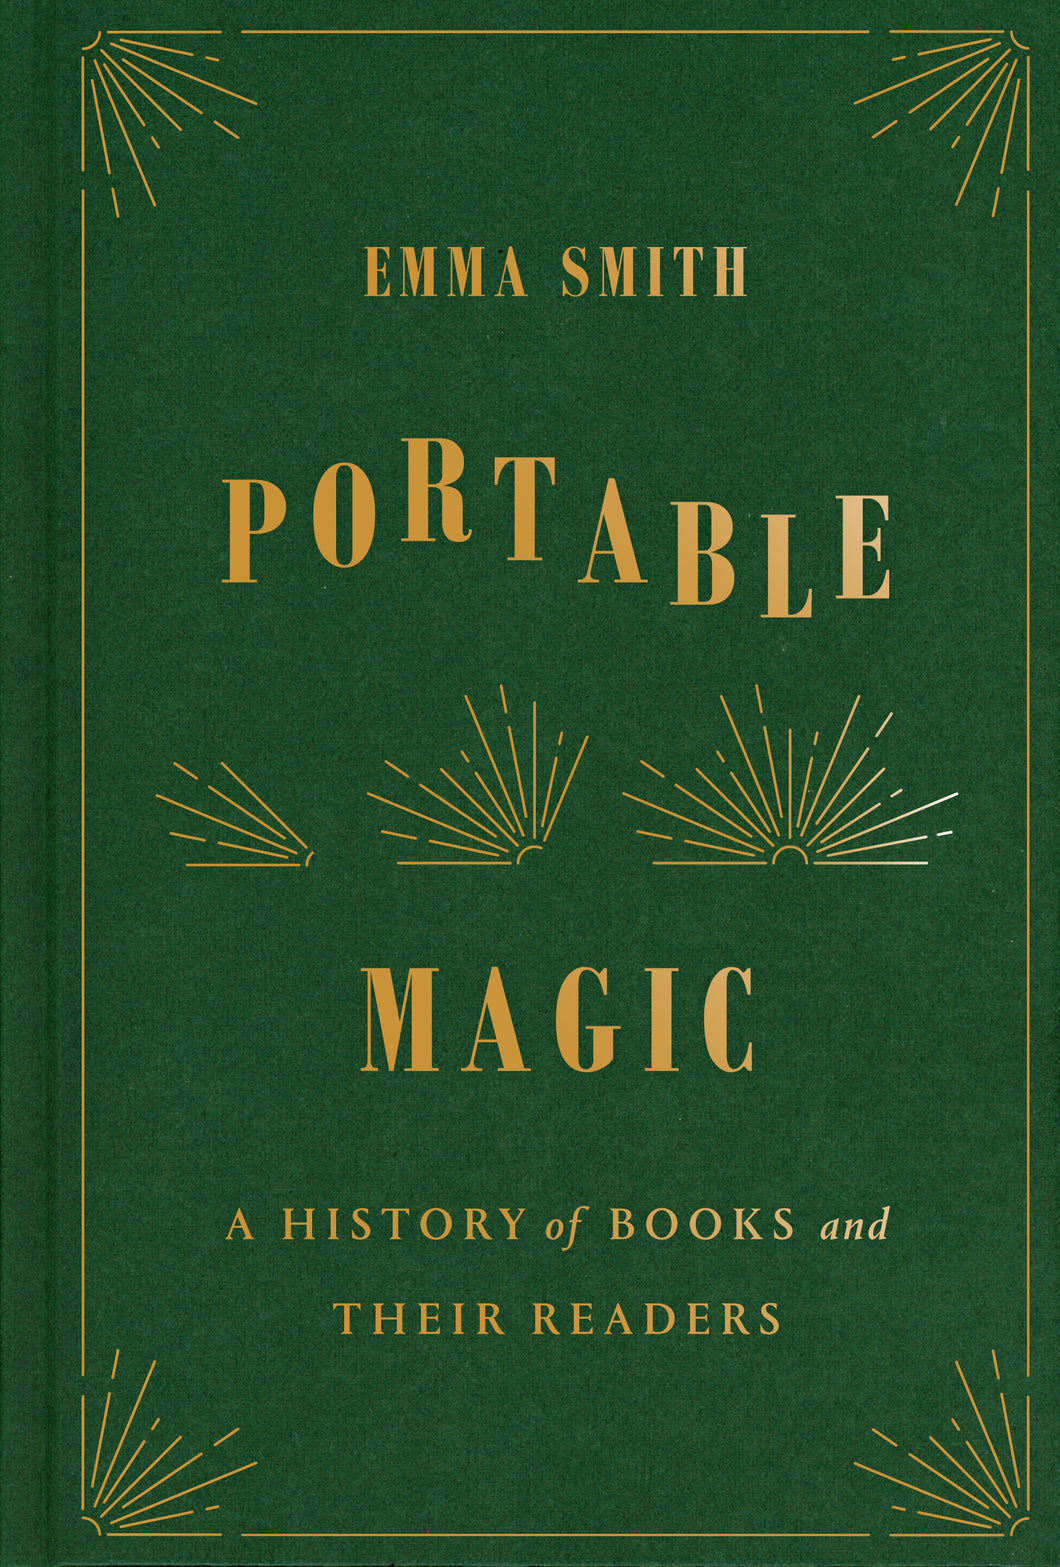 Portable Magic: A History of Books and Their Readers ร้านหนังสือและสิ่งของ เป็นร้านหนังสือภาษาอังกฤษหายาก และร้านกาแฟ หรือ บุ๊คคาเฟ่ ตั้งอยู่สุขุมวิท กรุงเทพ